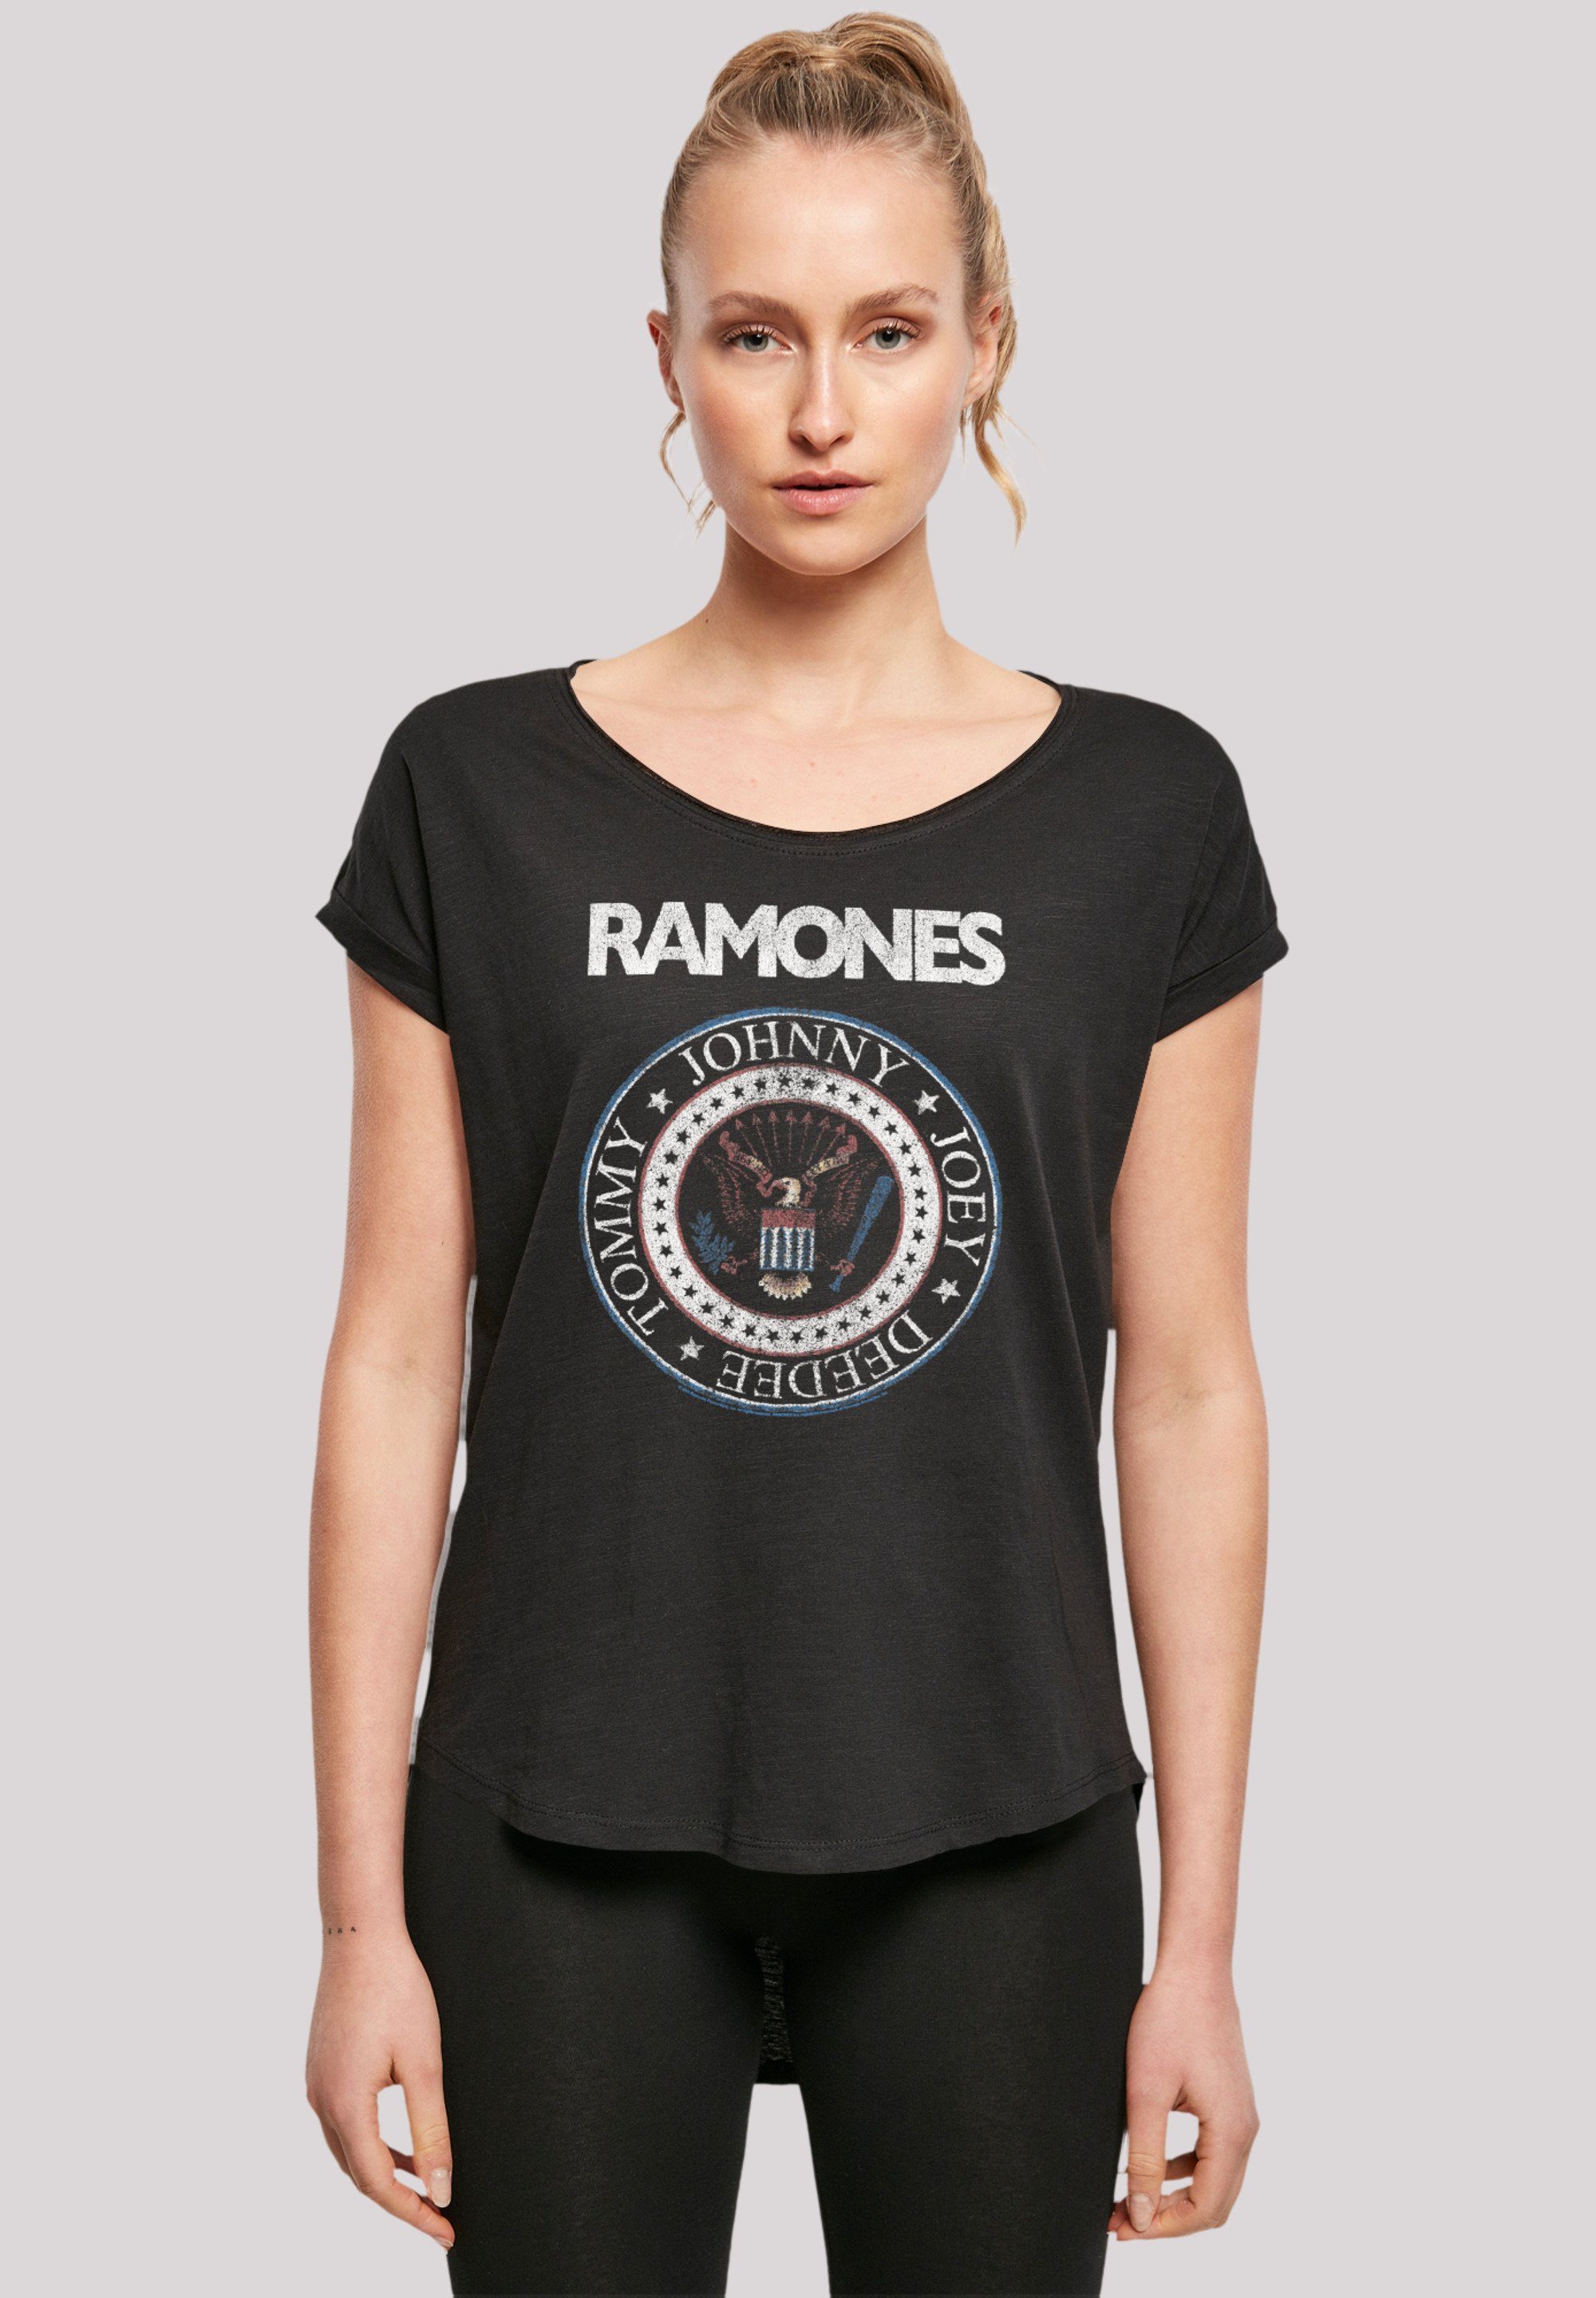 lang Band, extra Qualität, Ramones geschnittenes Rock Rock-Musik, White F4NT4STIC T-Shirt Premium Red T-Shirt Seal Band And Damen Musik Hinten